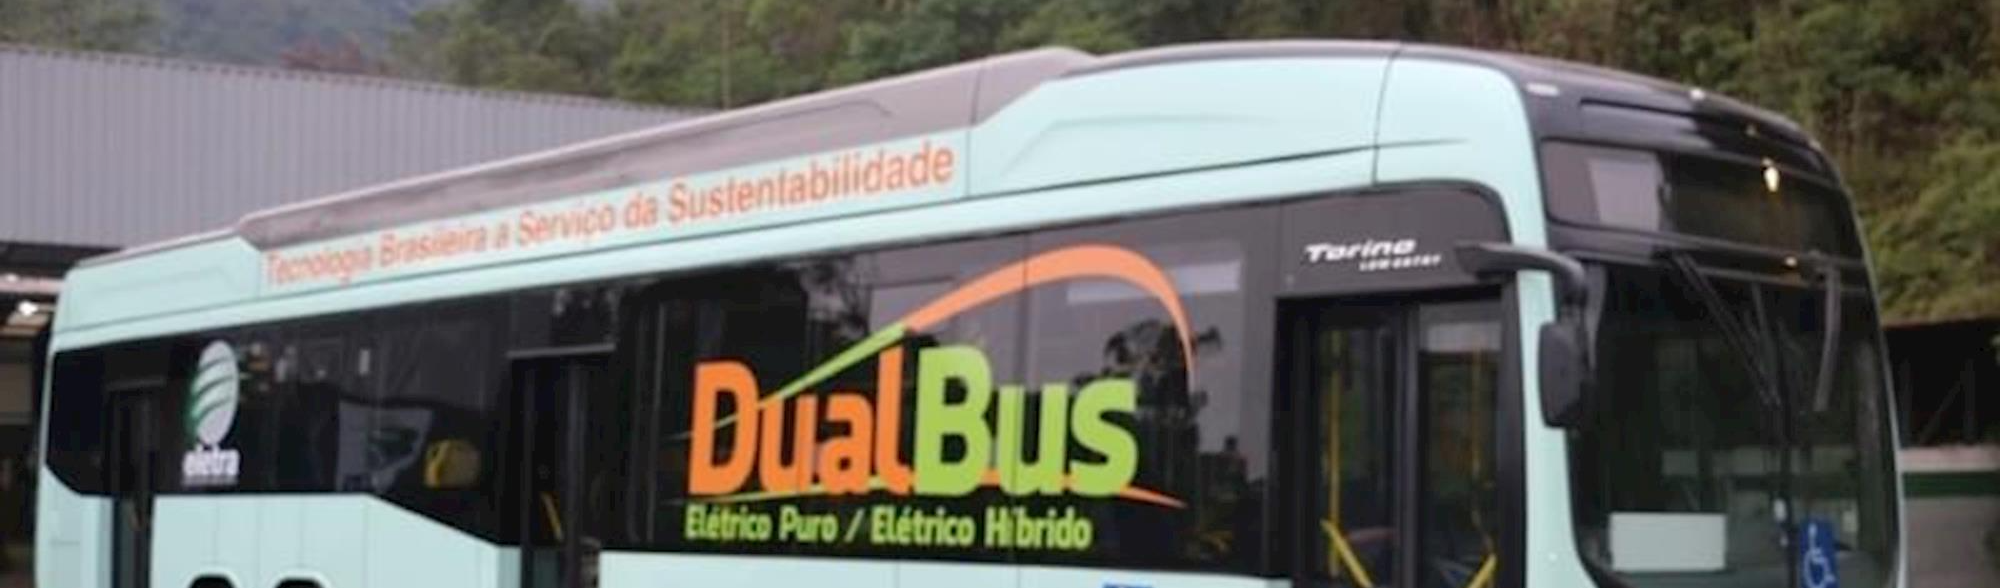 Veículos elétricos: Brasil poderia liderar mercado como fabricante, mas está atrasado